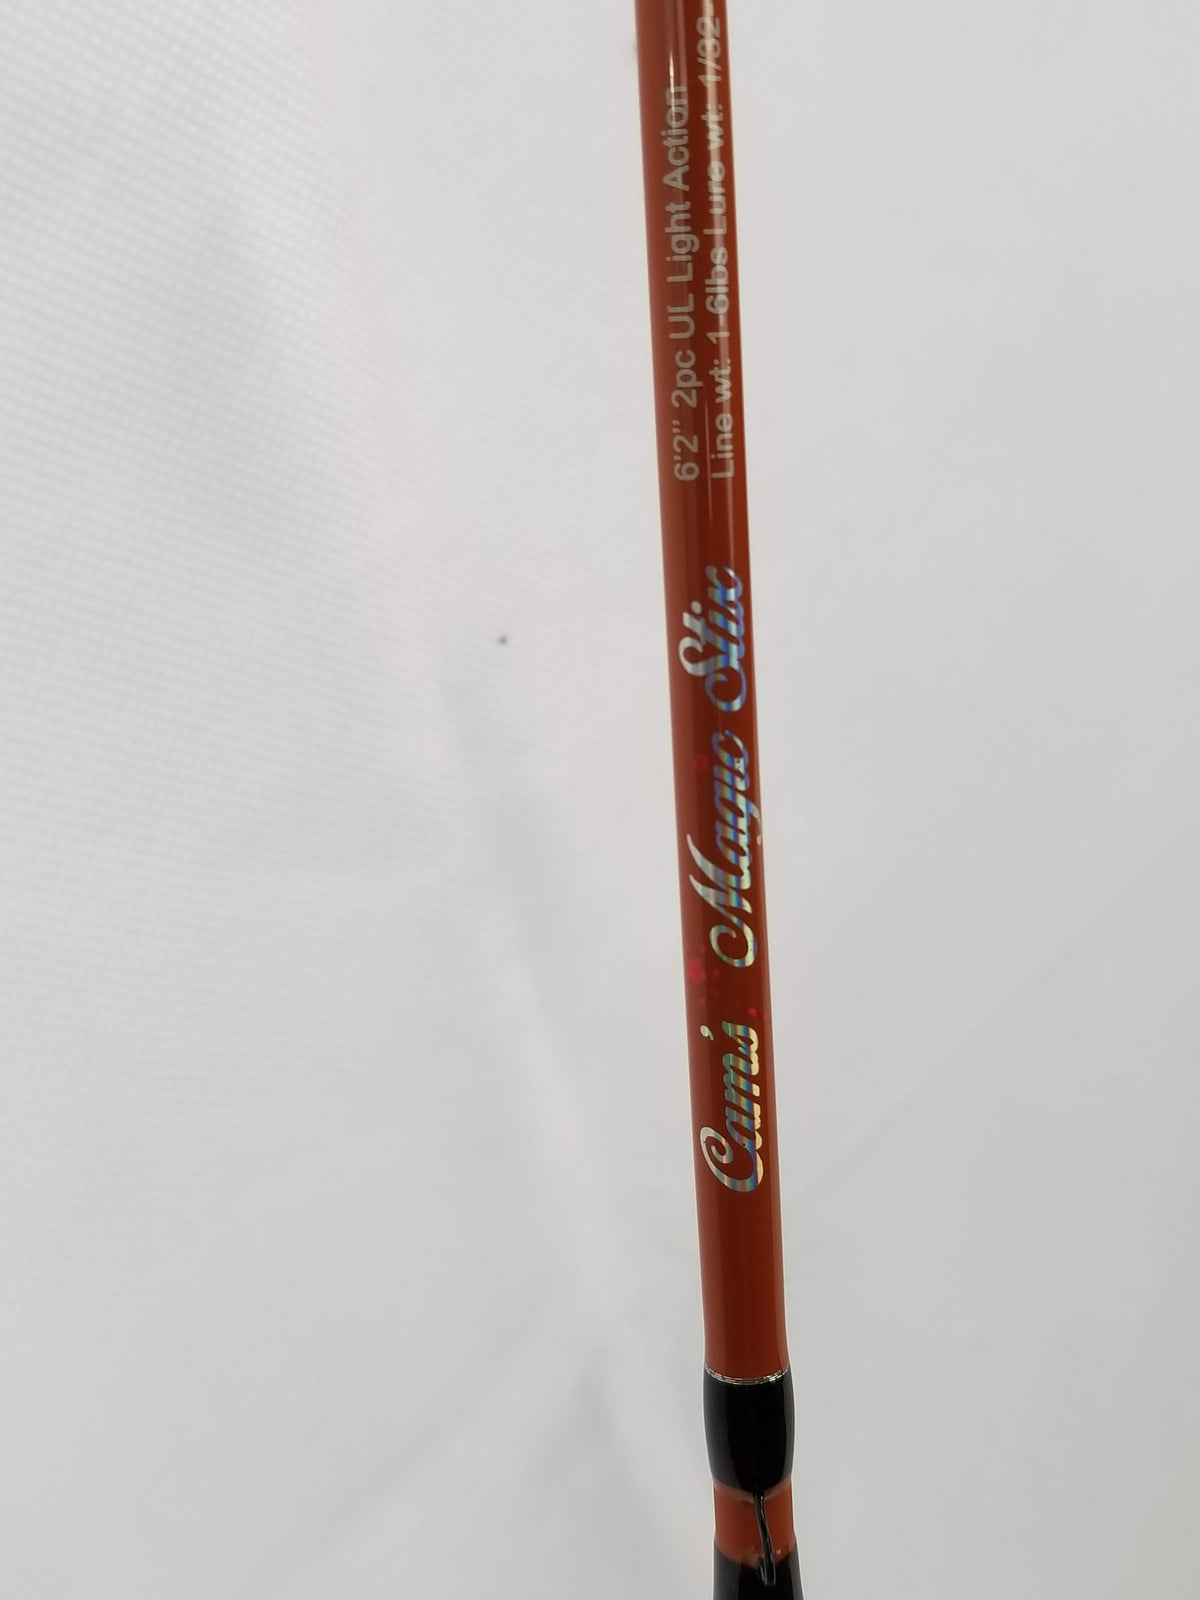 Cam's "Orange Poseidon"  6'0  Spinning rod and reel (6+1) Combo